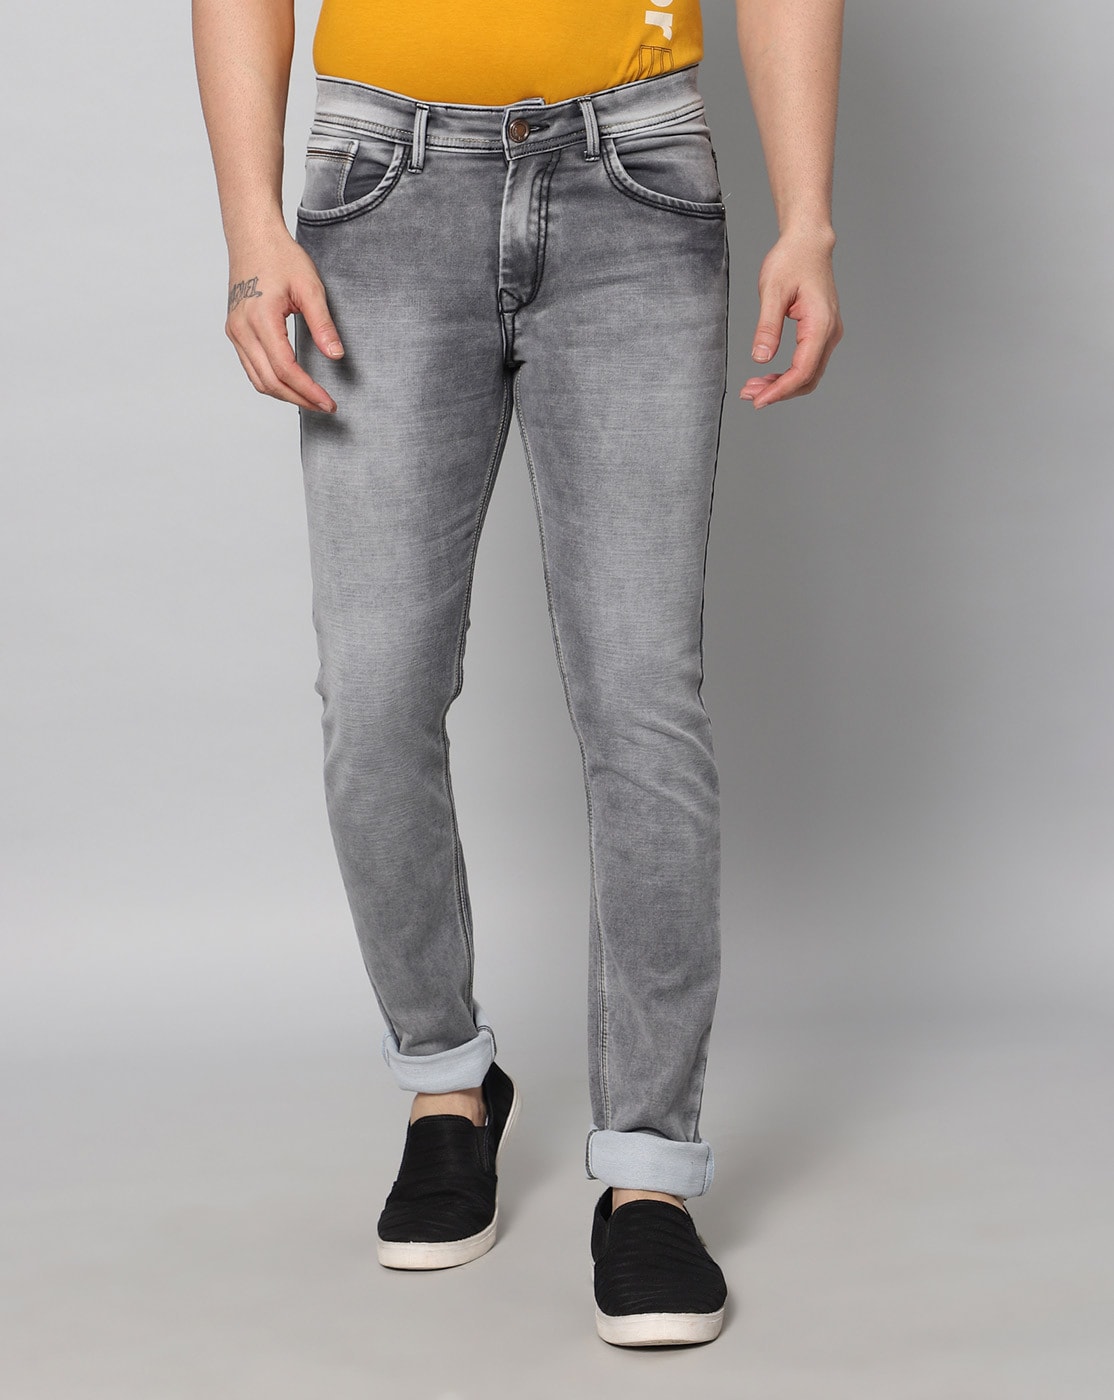 Shop Jordan Craig Distressed Skinny Jeans JR1102-GRY grey | SNIPES USA